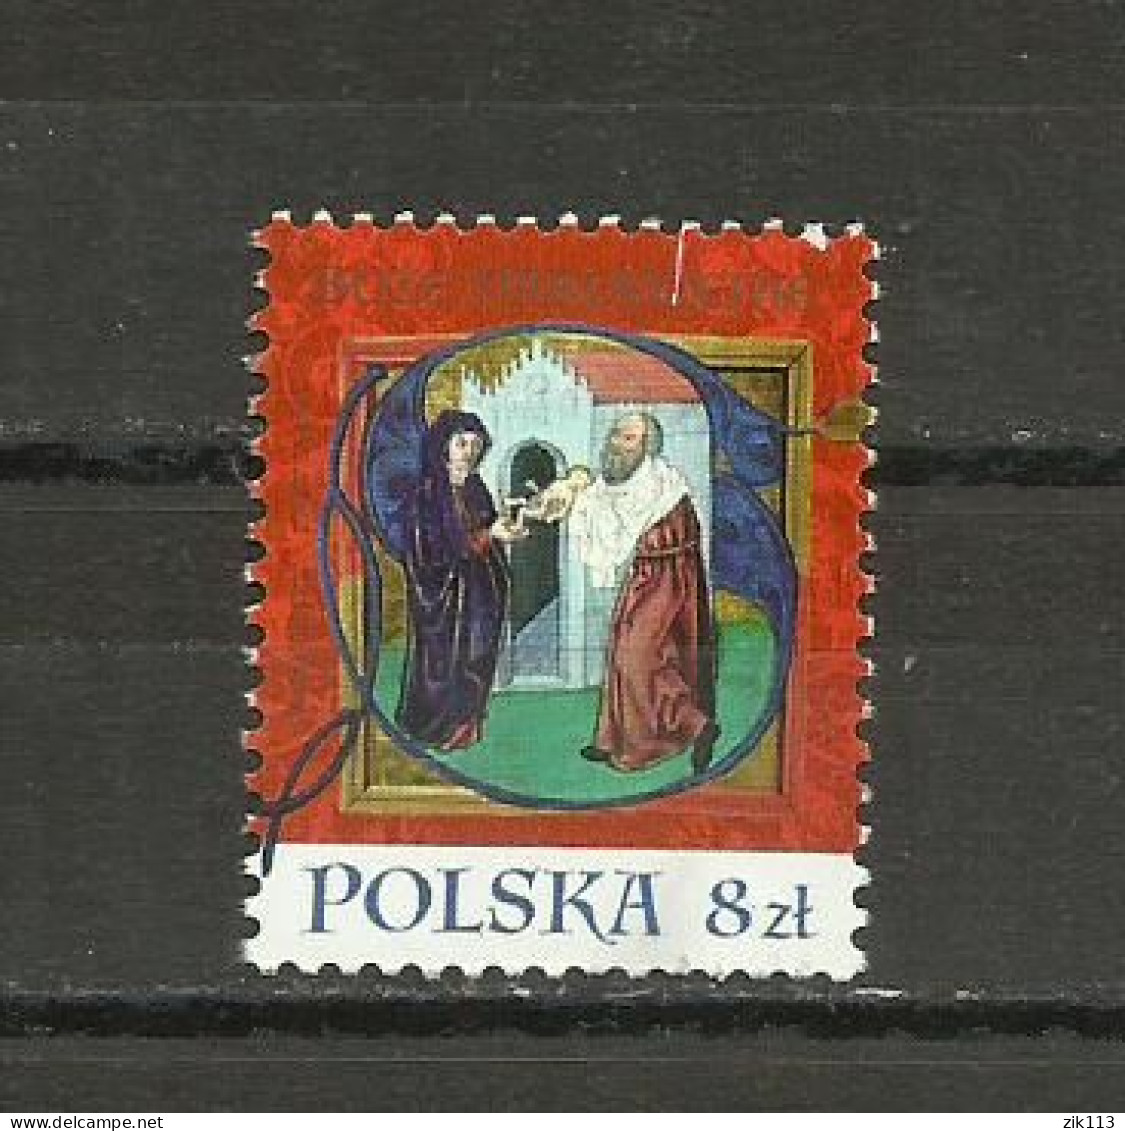 POLAND 2020 - ECONOMIC  STAMP, CHRISTMAS , MNH - Unused Stamps